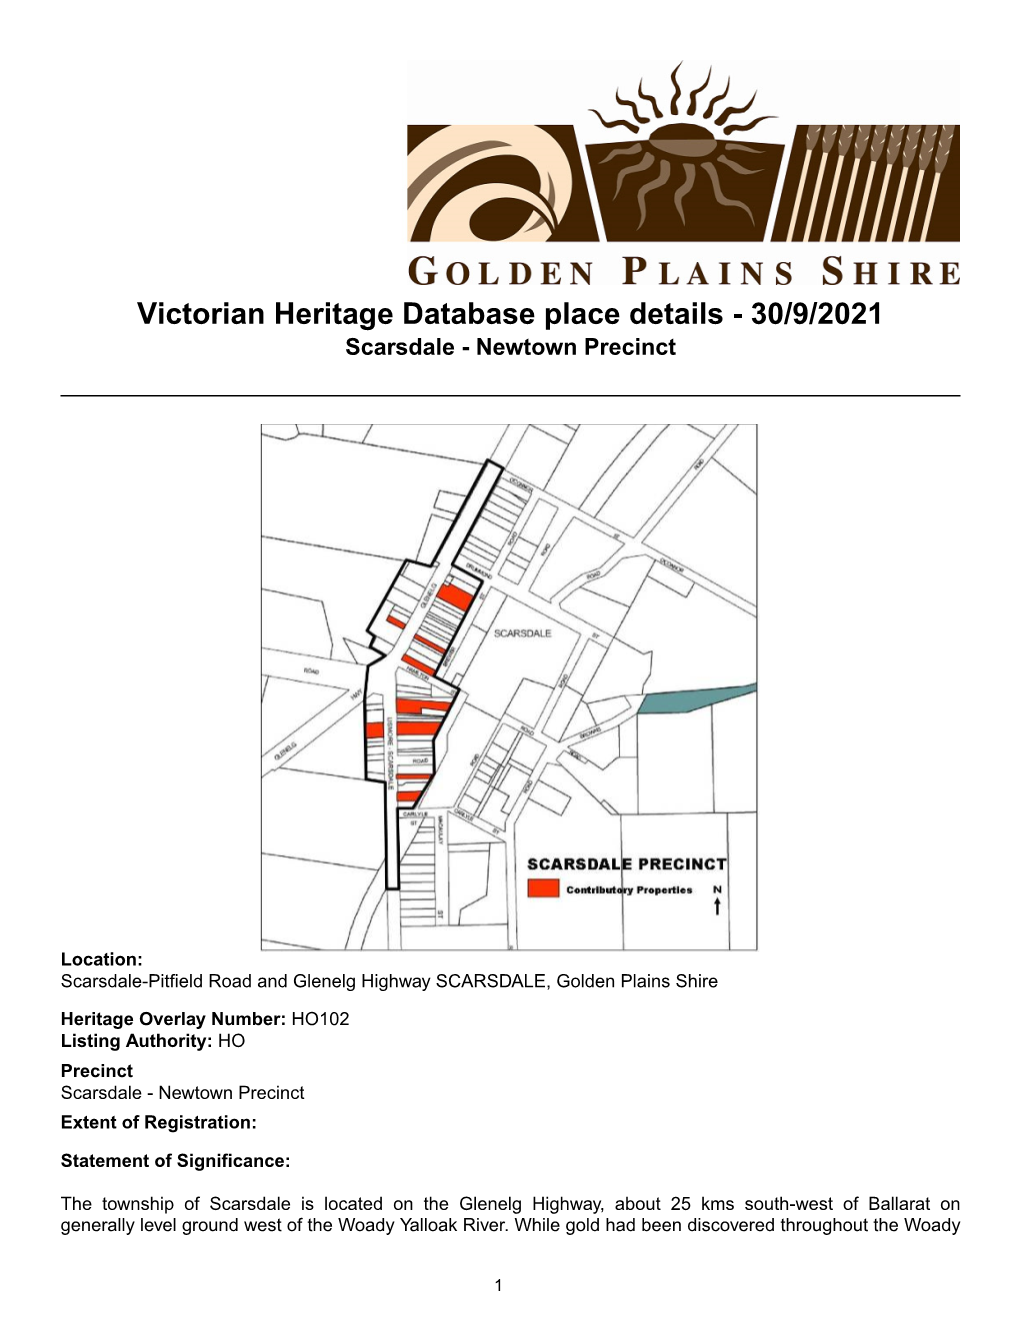 Victorian Heritage Database Place Details - 30/9/2021 Scarsdale - Newtown Precinct